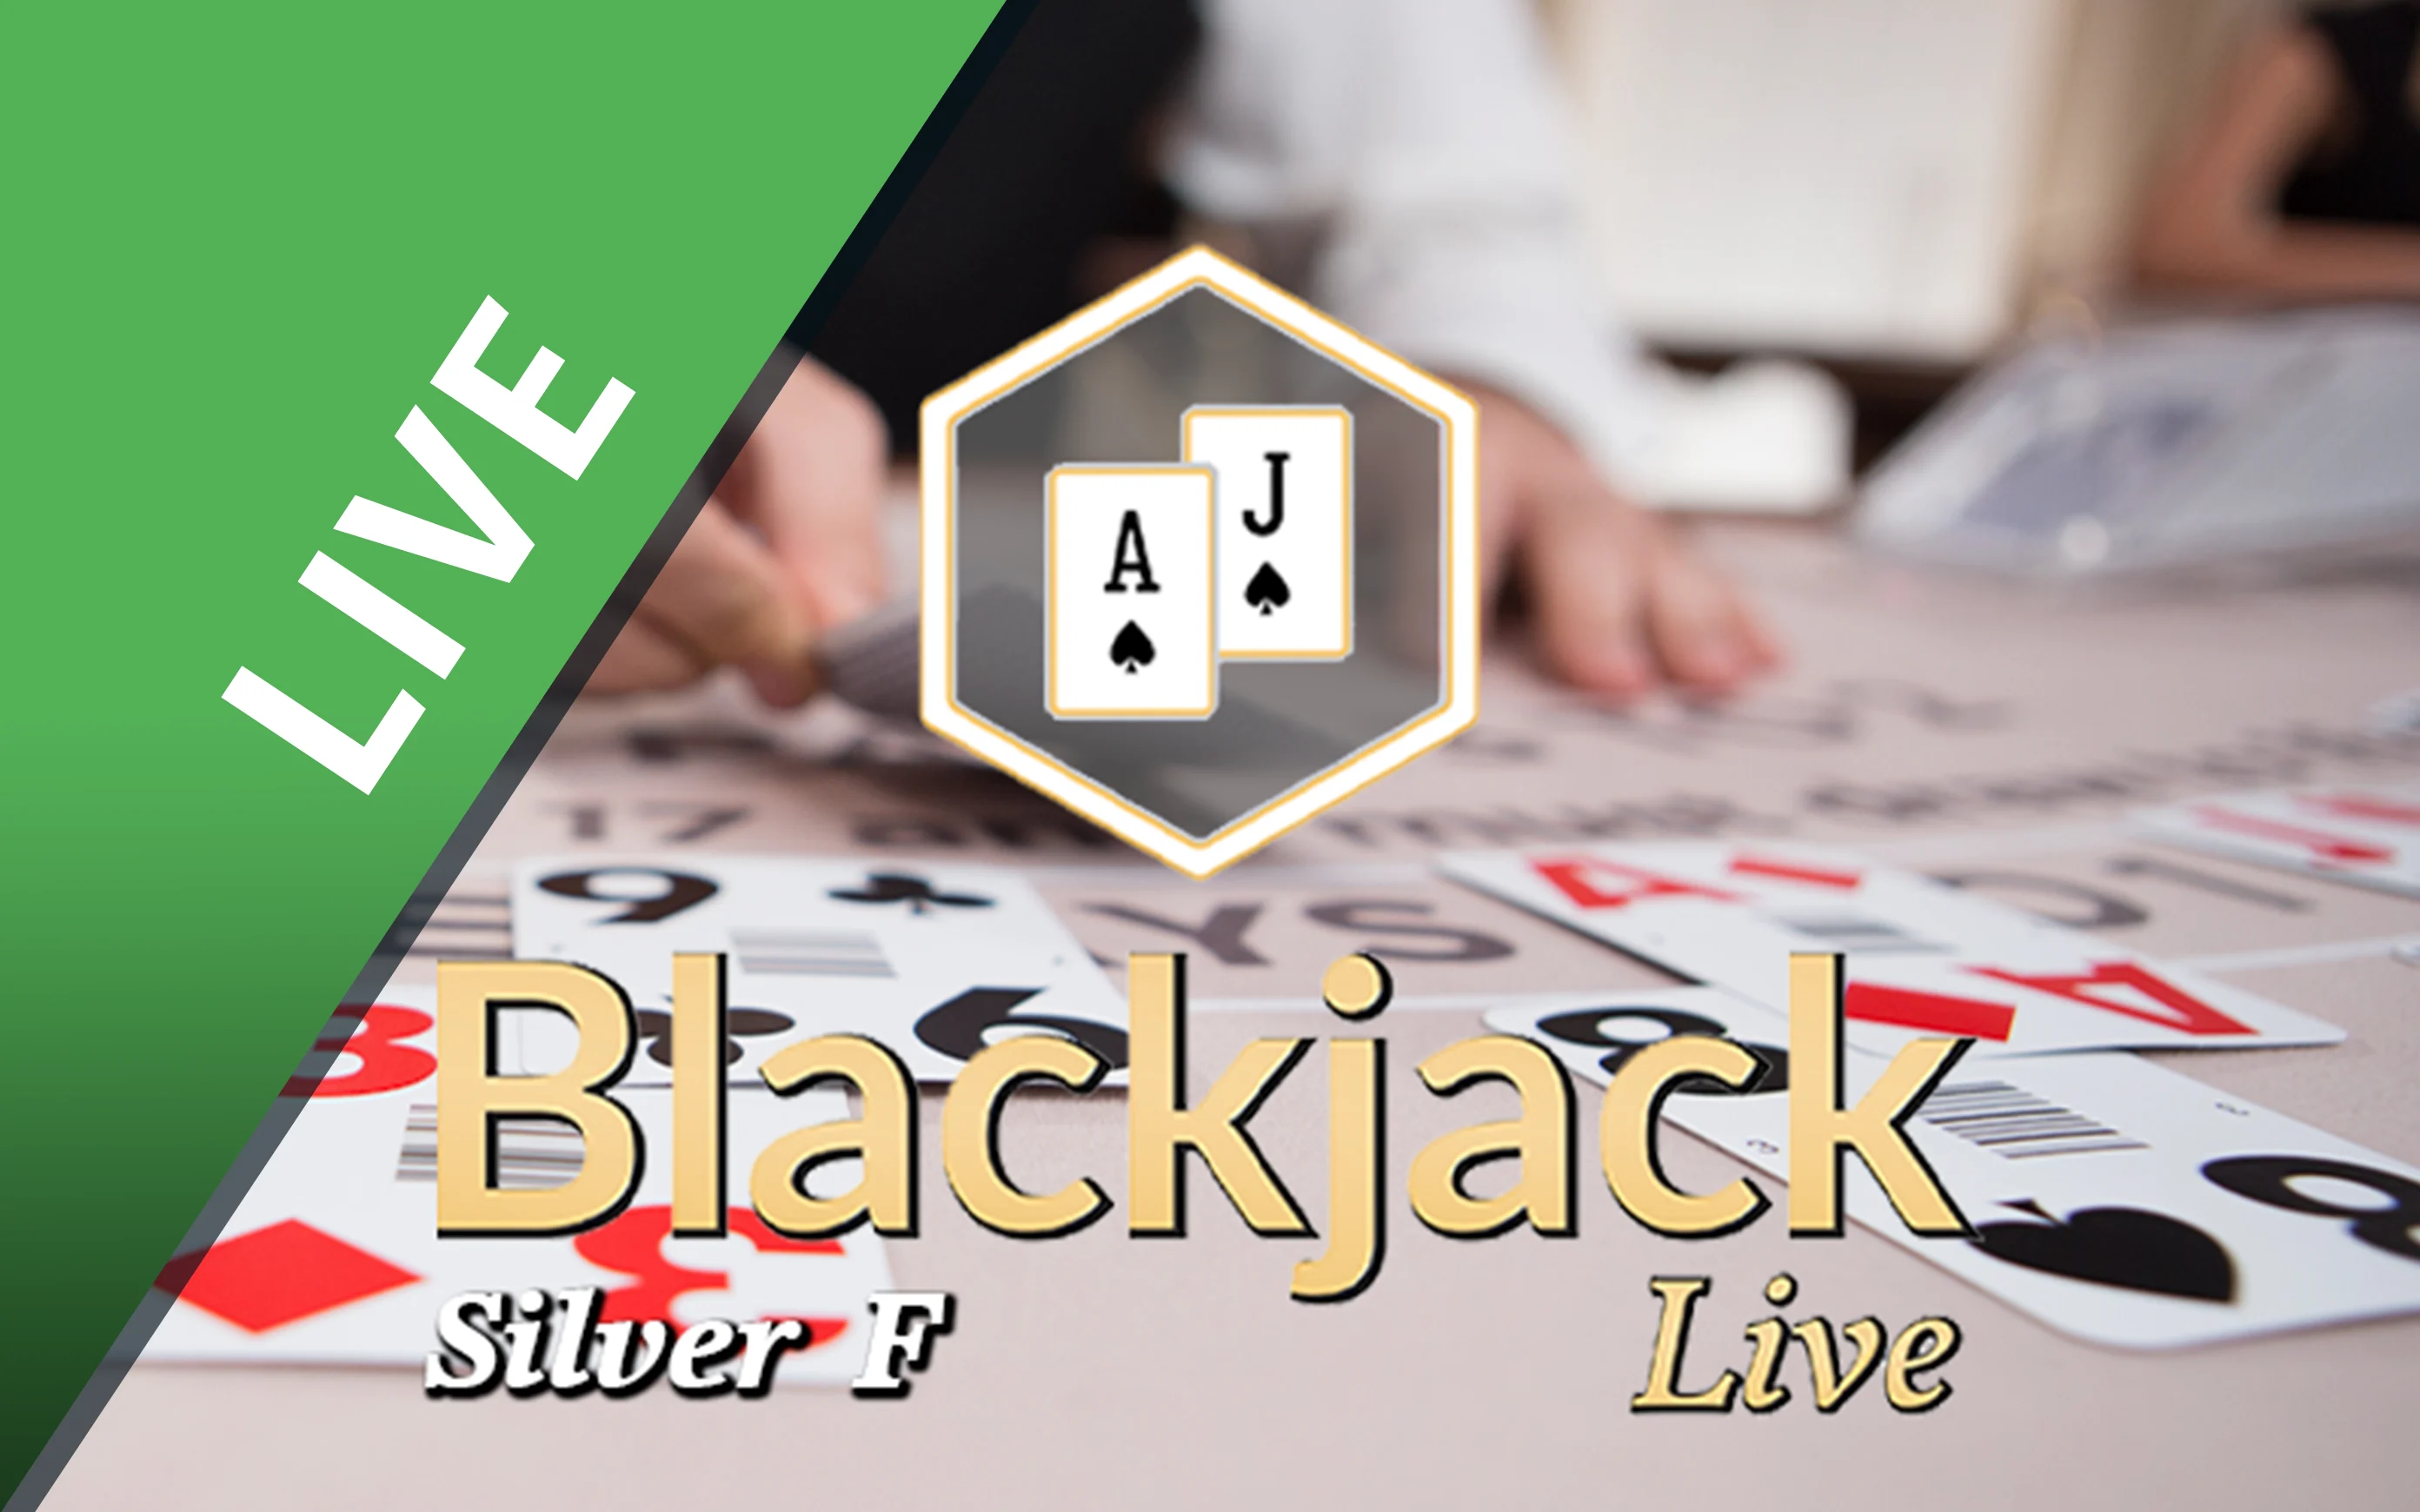 Play Blackjack Silver F on Starcasino.be online casino